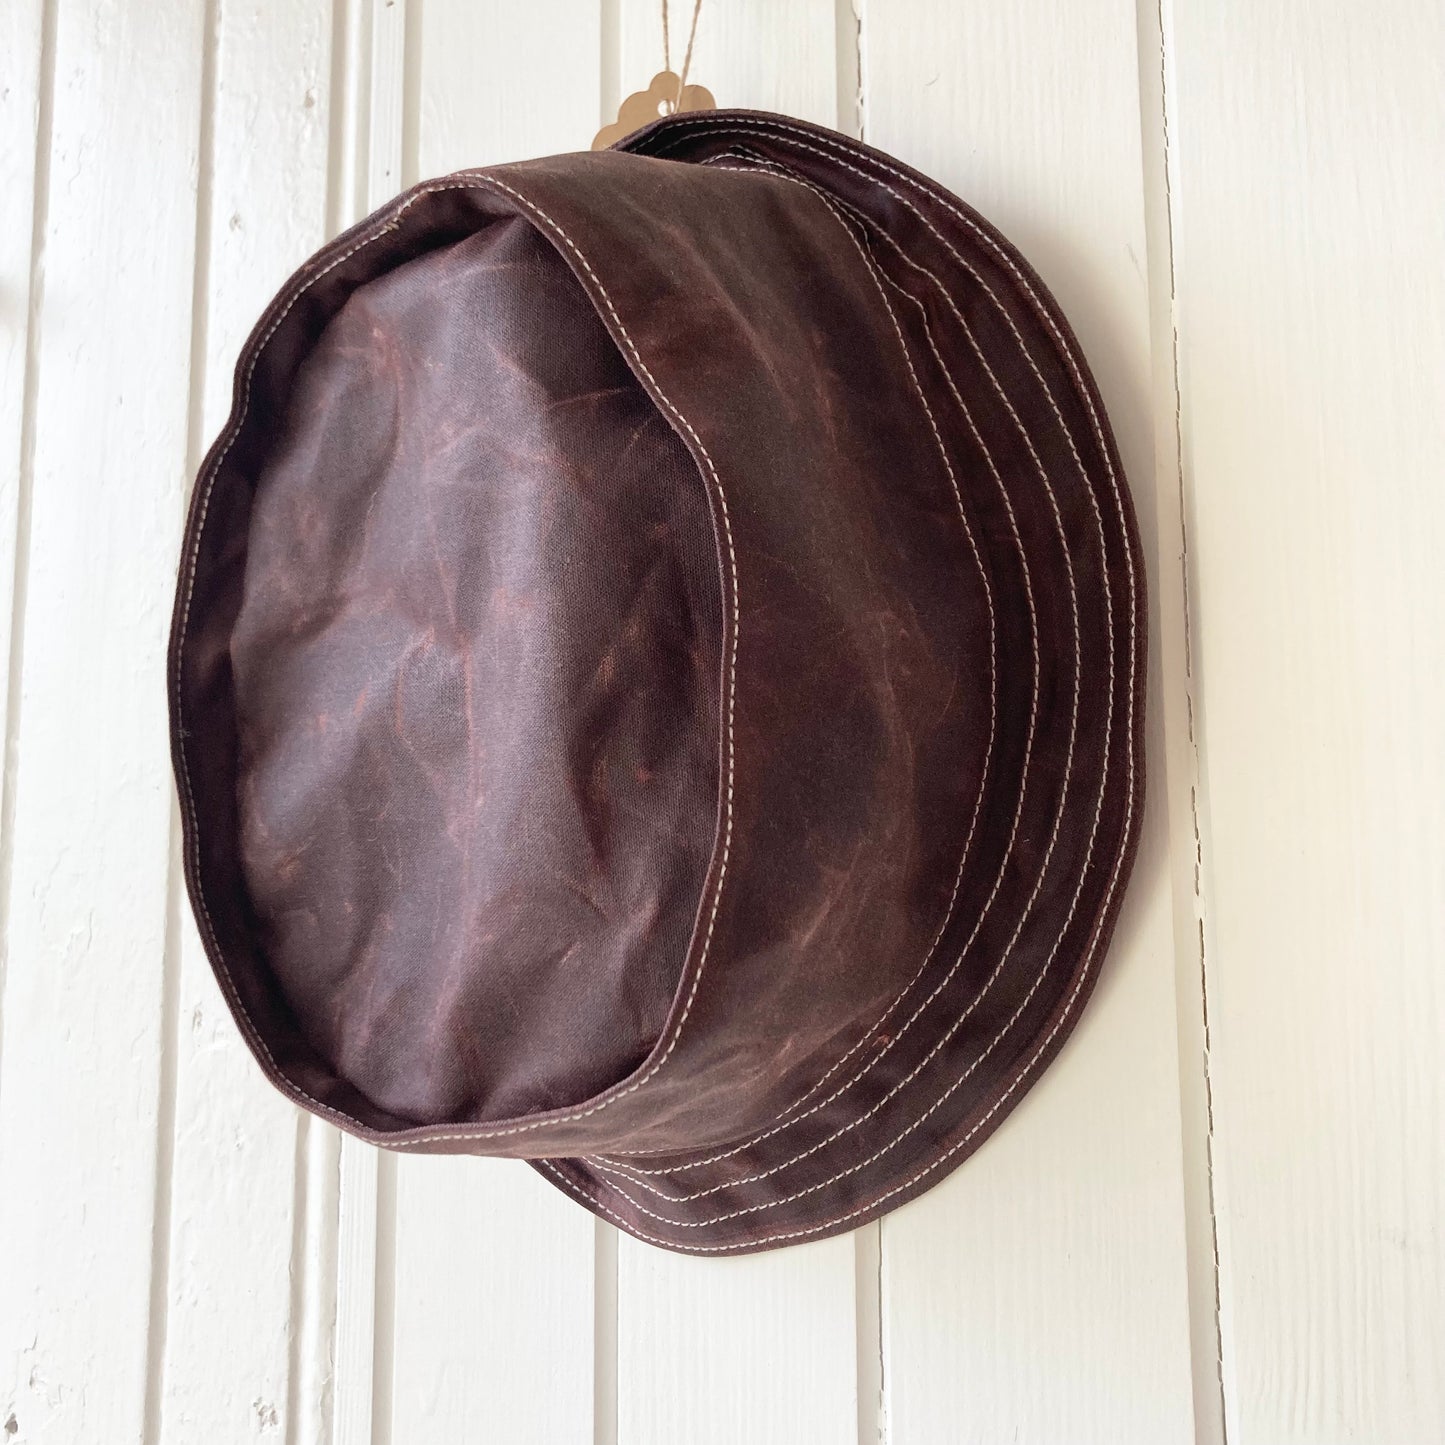 oilskin pork pie hat - large dark conker waxy